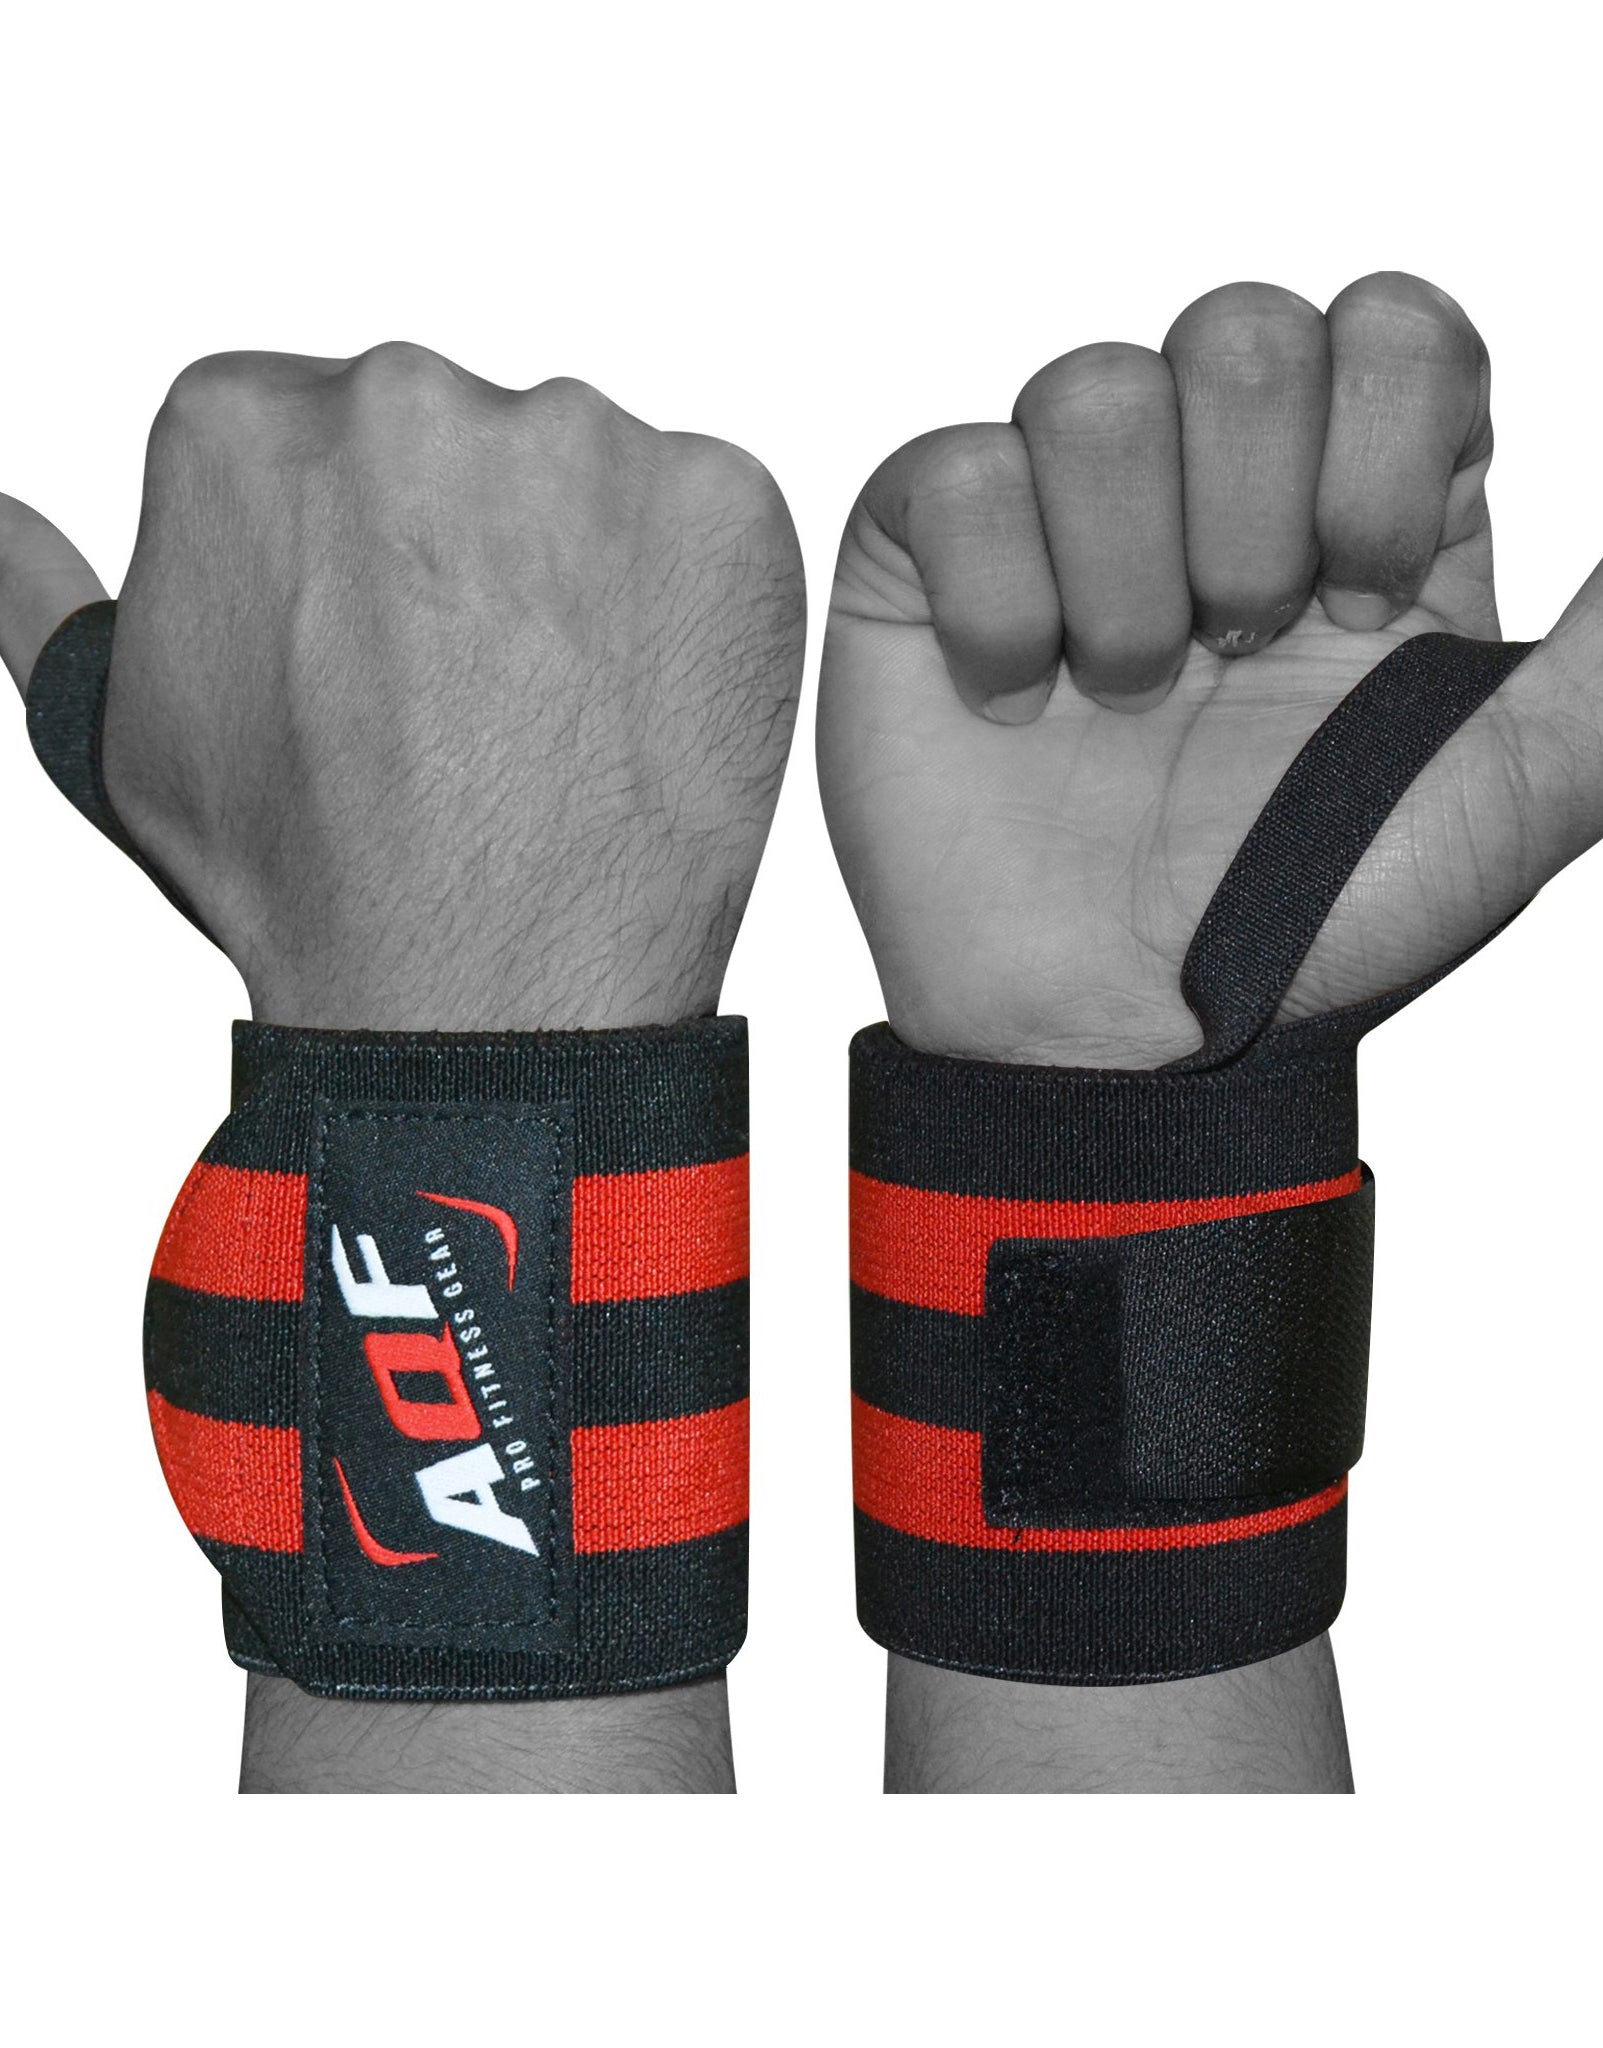 Black & Red Weight Lifting Wrist Wraps Bandage - AQF Sports